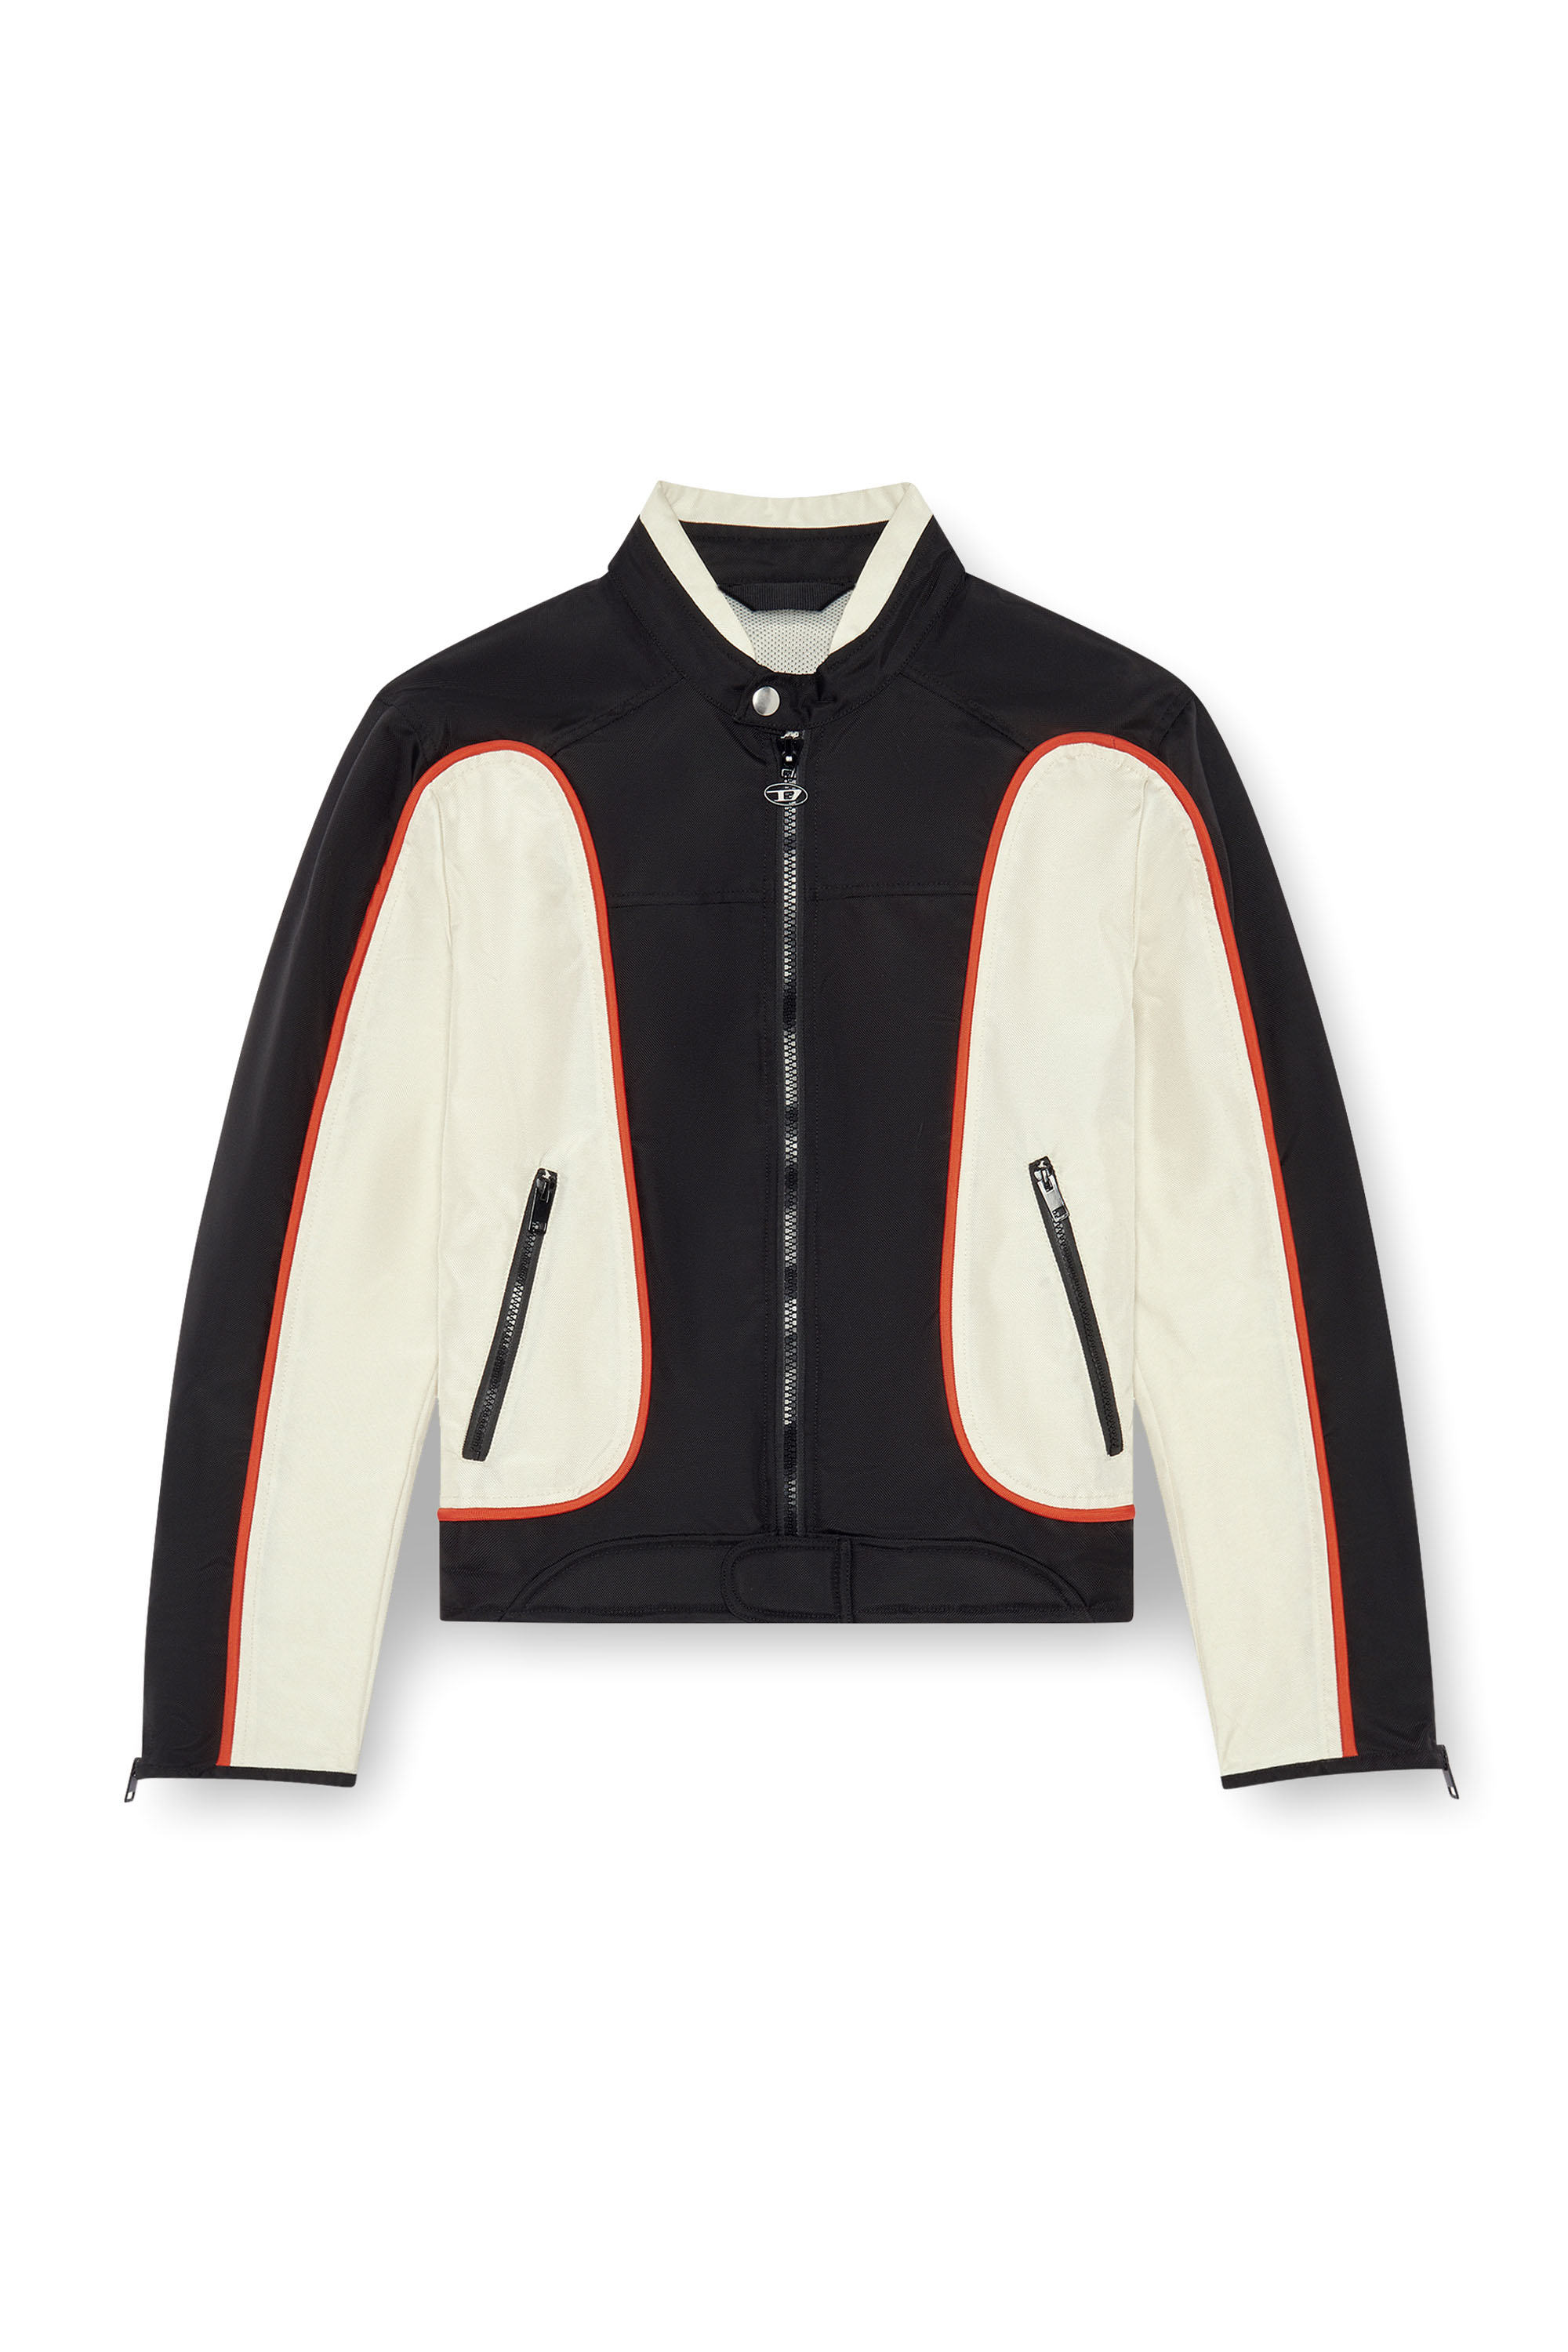 Diesel - J-BLINK, Man Biker jacket in colour-block nylon in Multicolor - Image 6